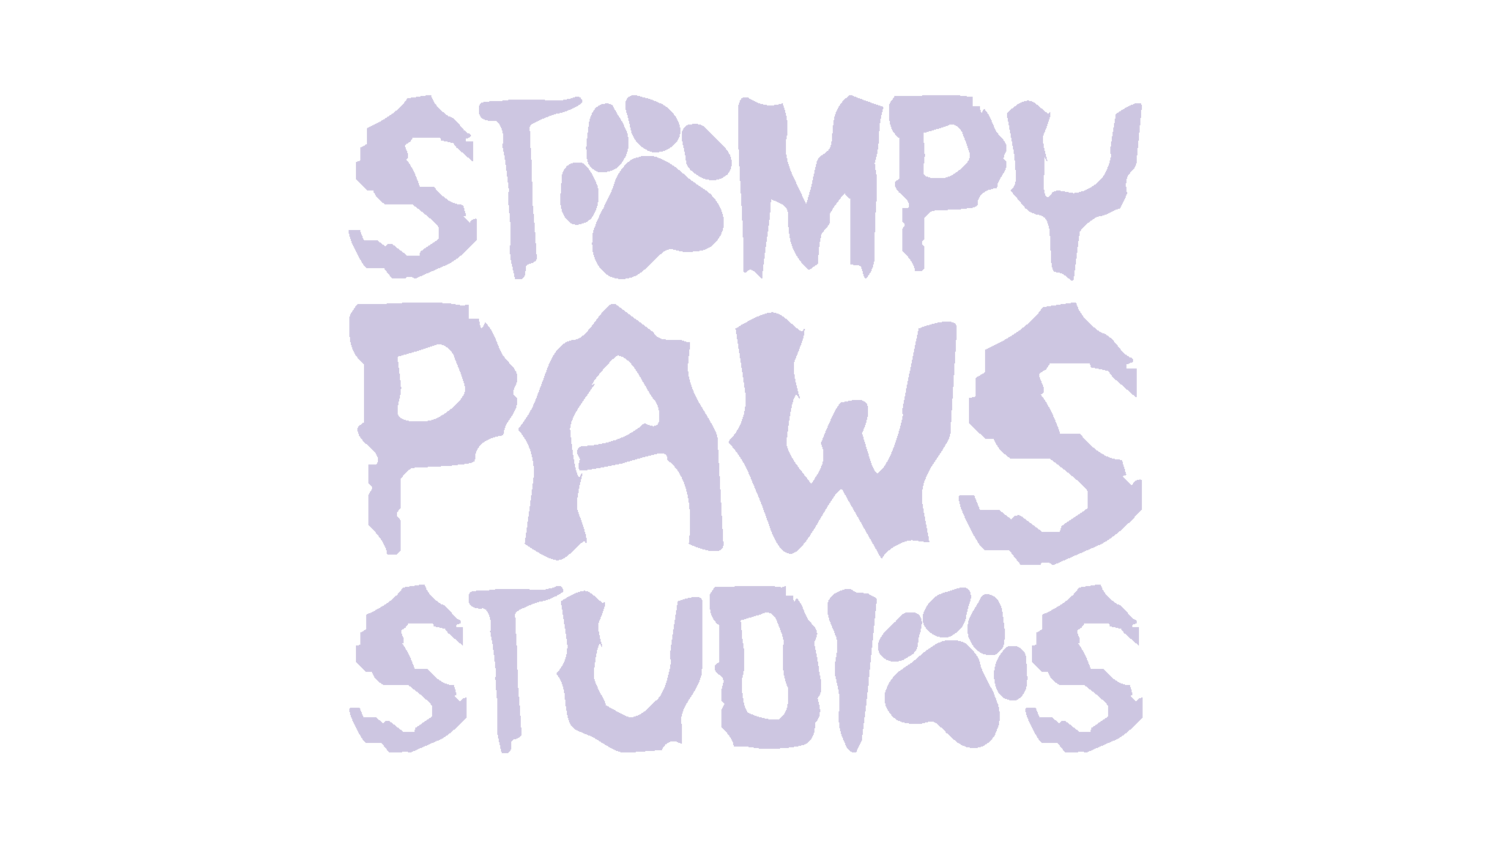 Stompy Paws Studios